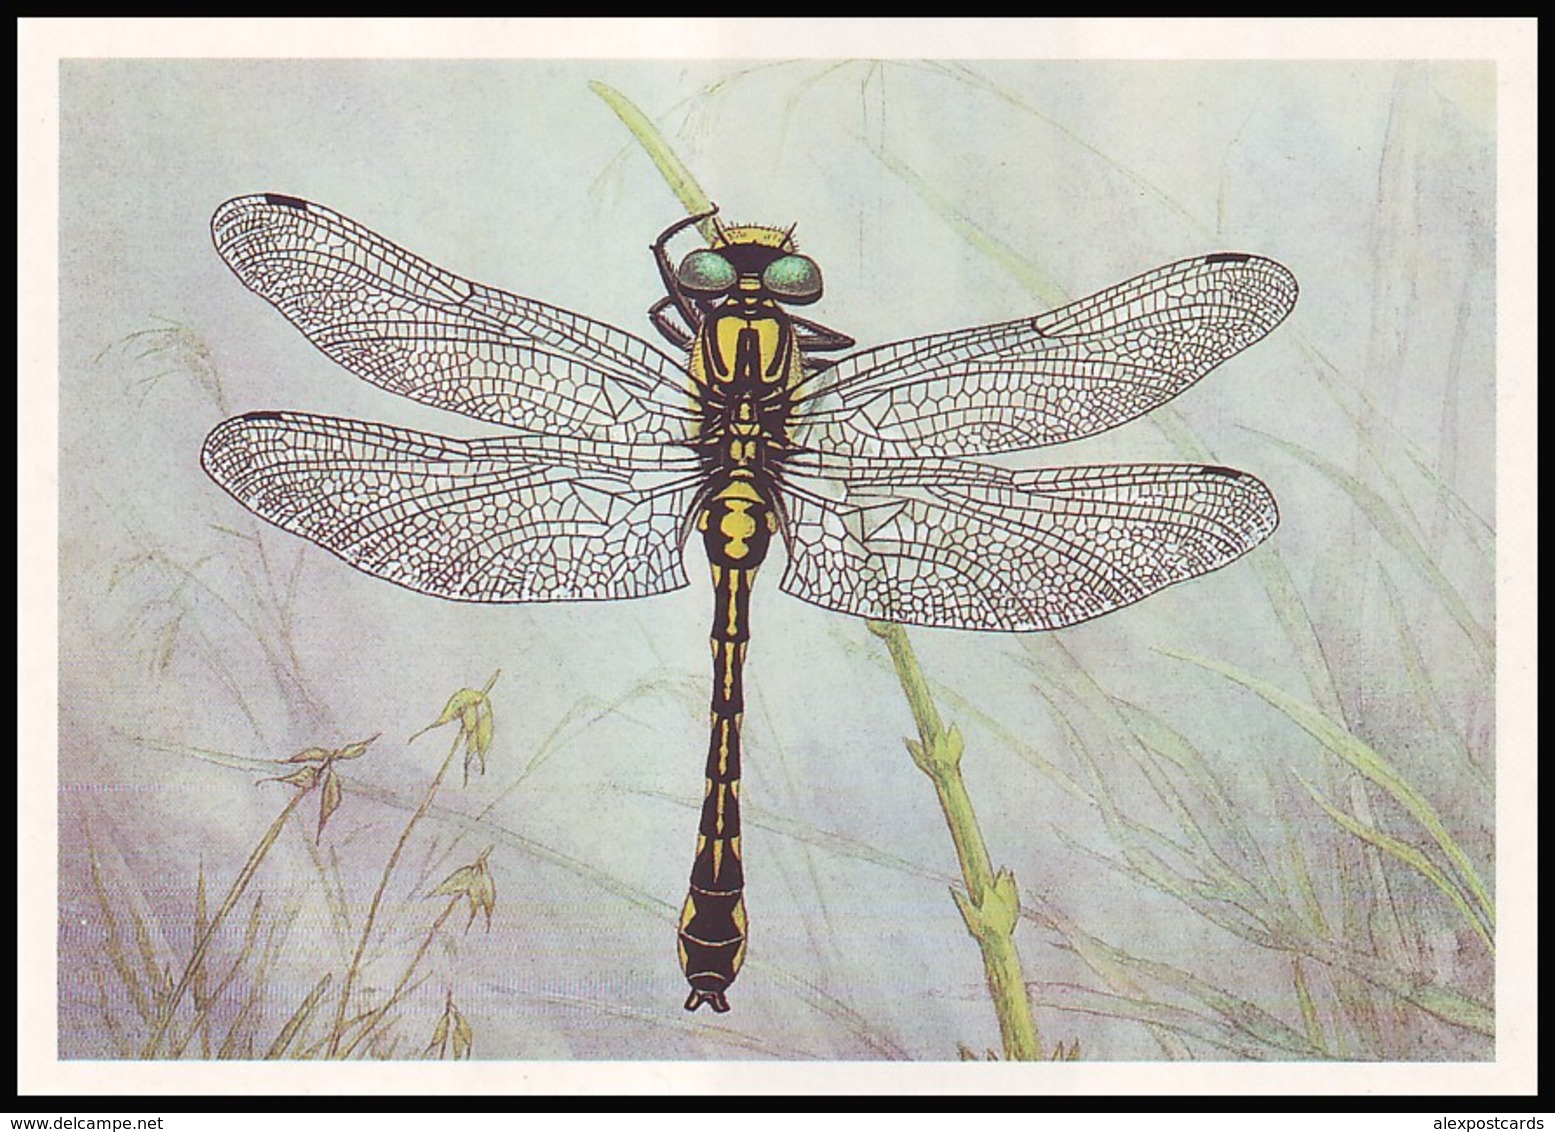 DRAGONFLY - Comphus Vulgatissimus L. Artist L. Aristov. Unused Postcard (USSR, 1987) - Insects